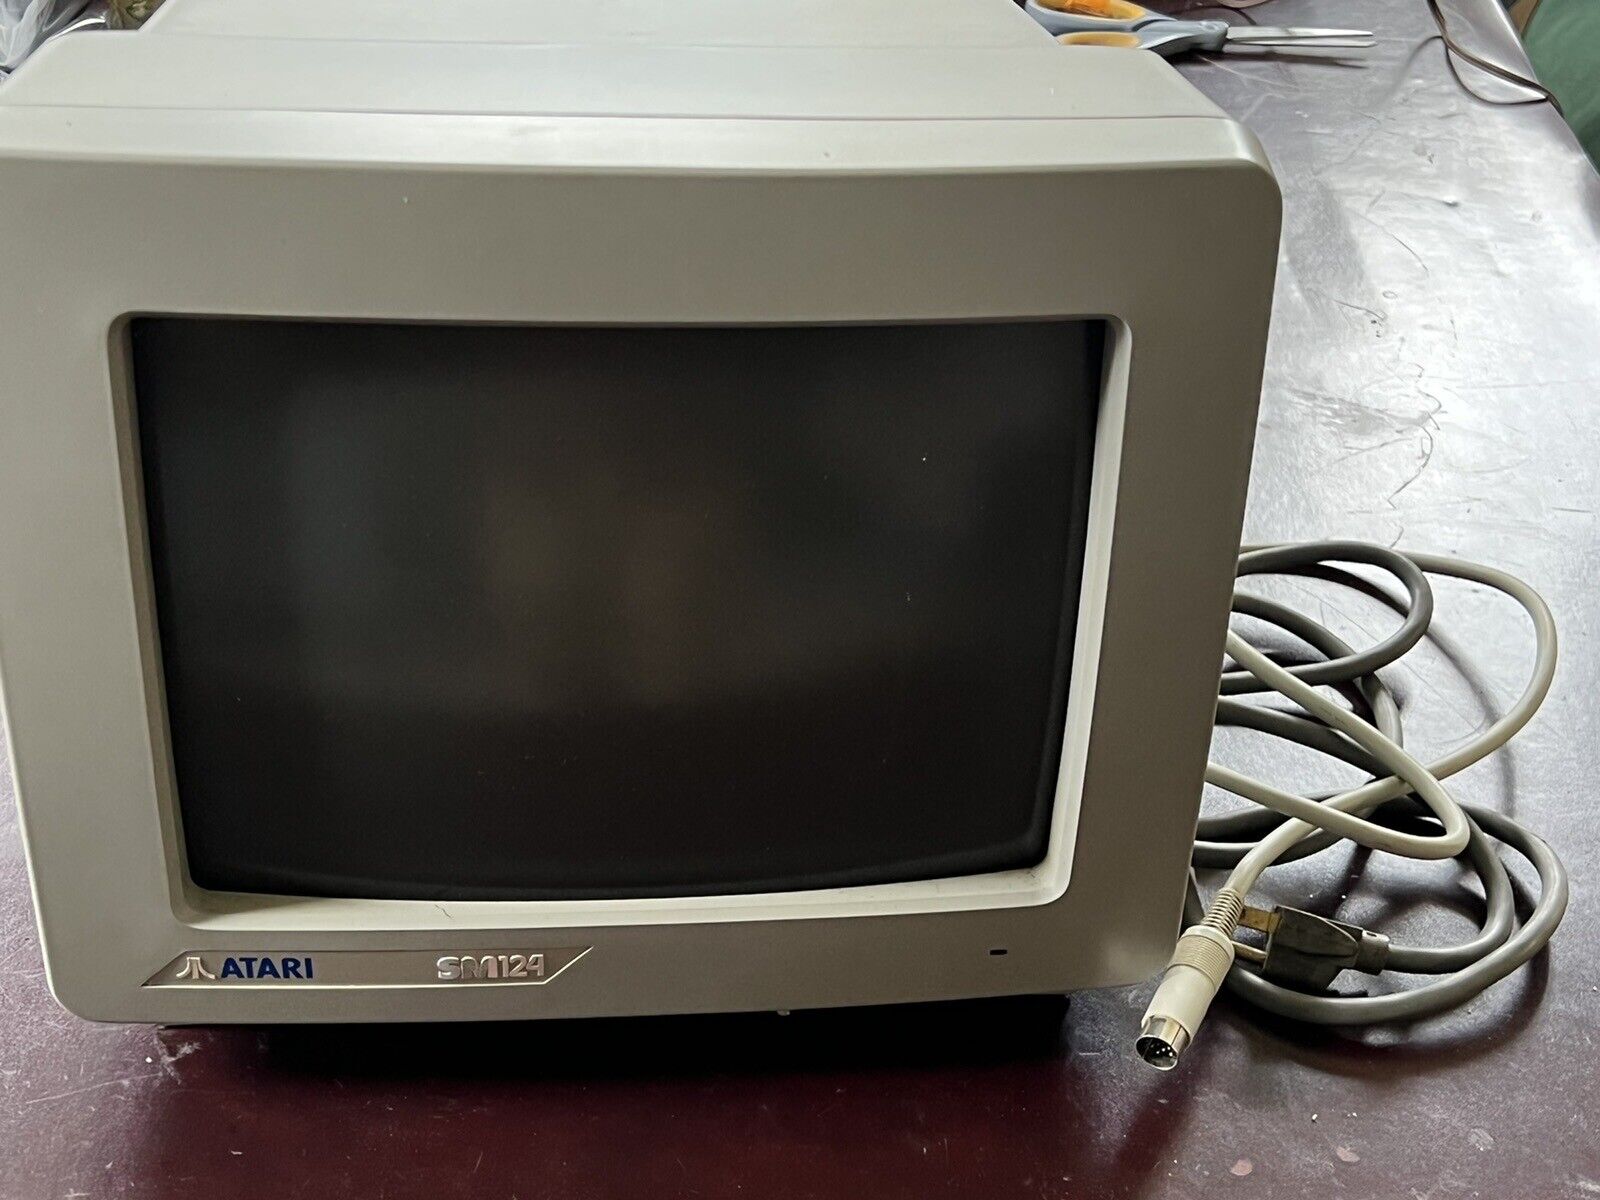 Atari  SM124 Monitor In Original Box with Power Cord, Seems To Work. *b